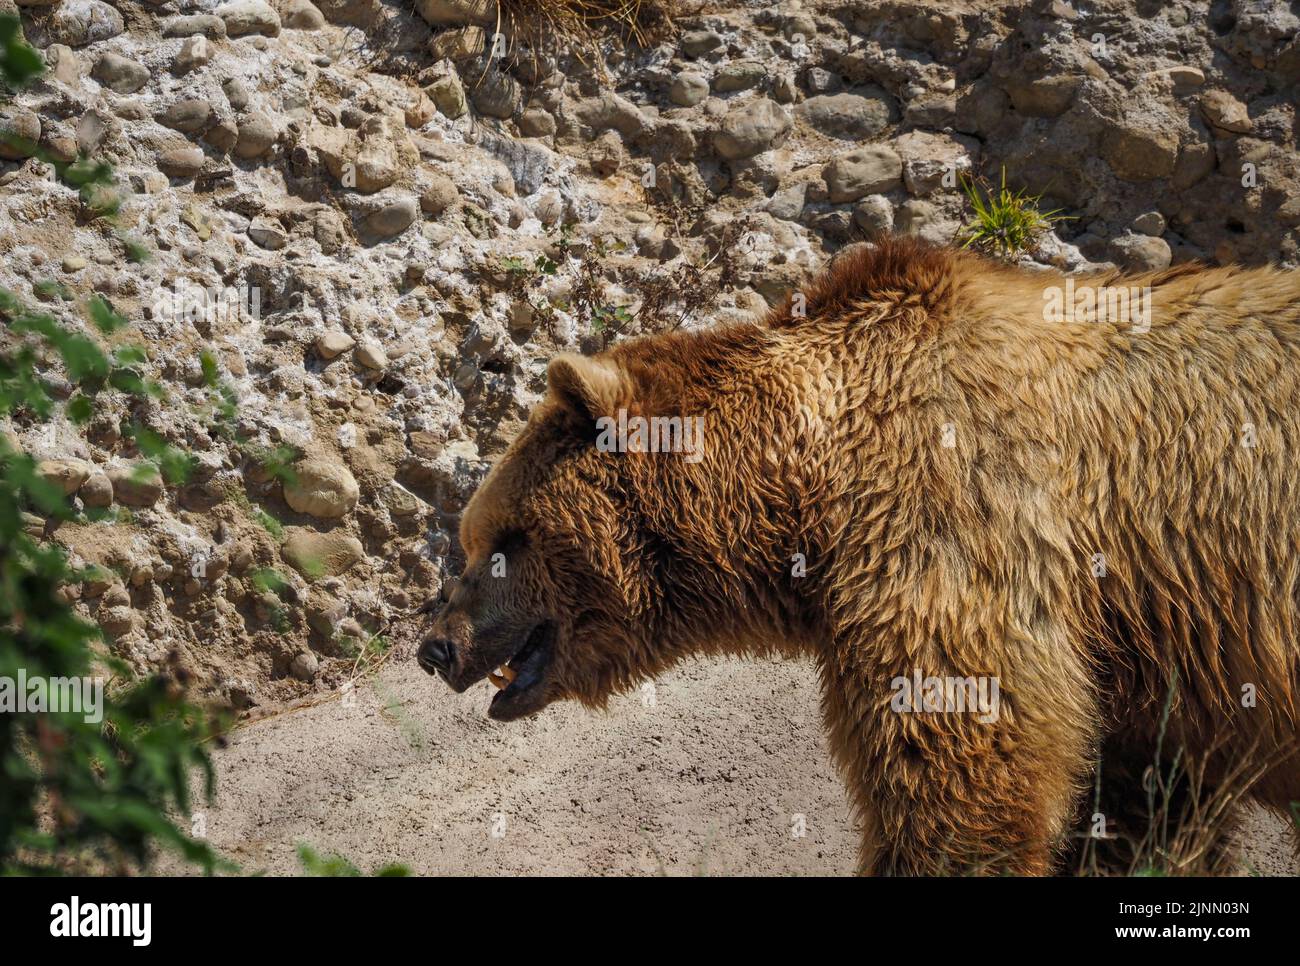 Brown bear in an enclosure at the Salzburg Zoo Stock Photo